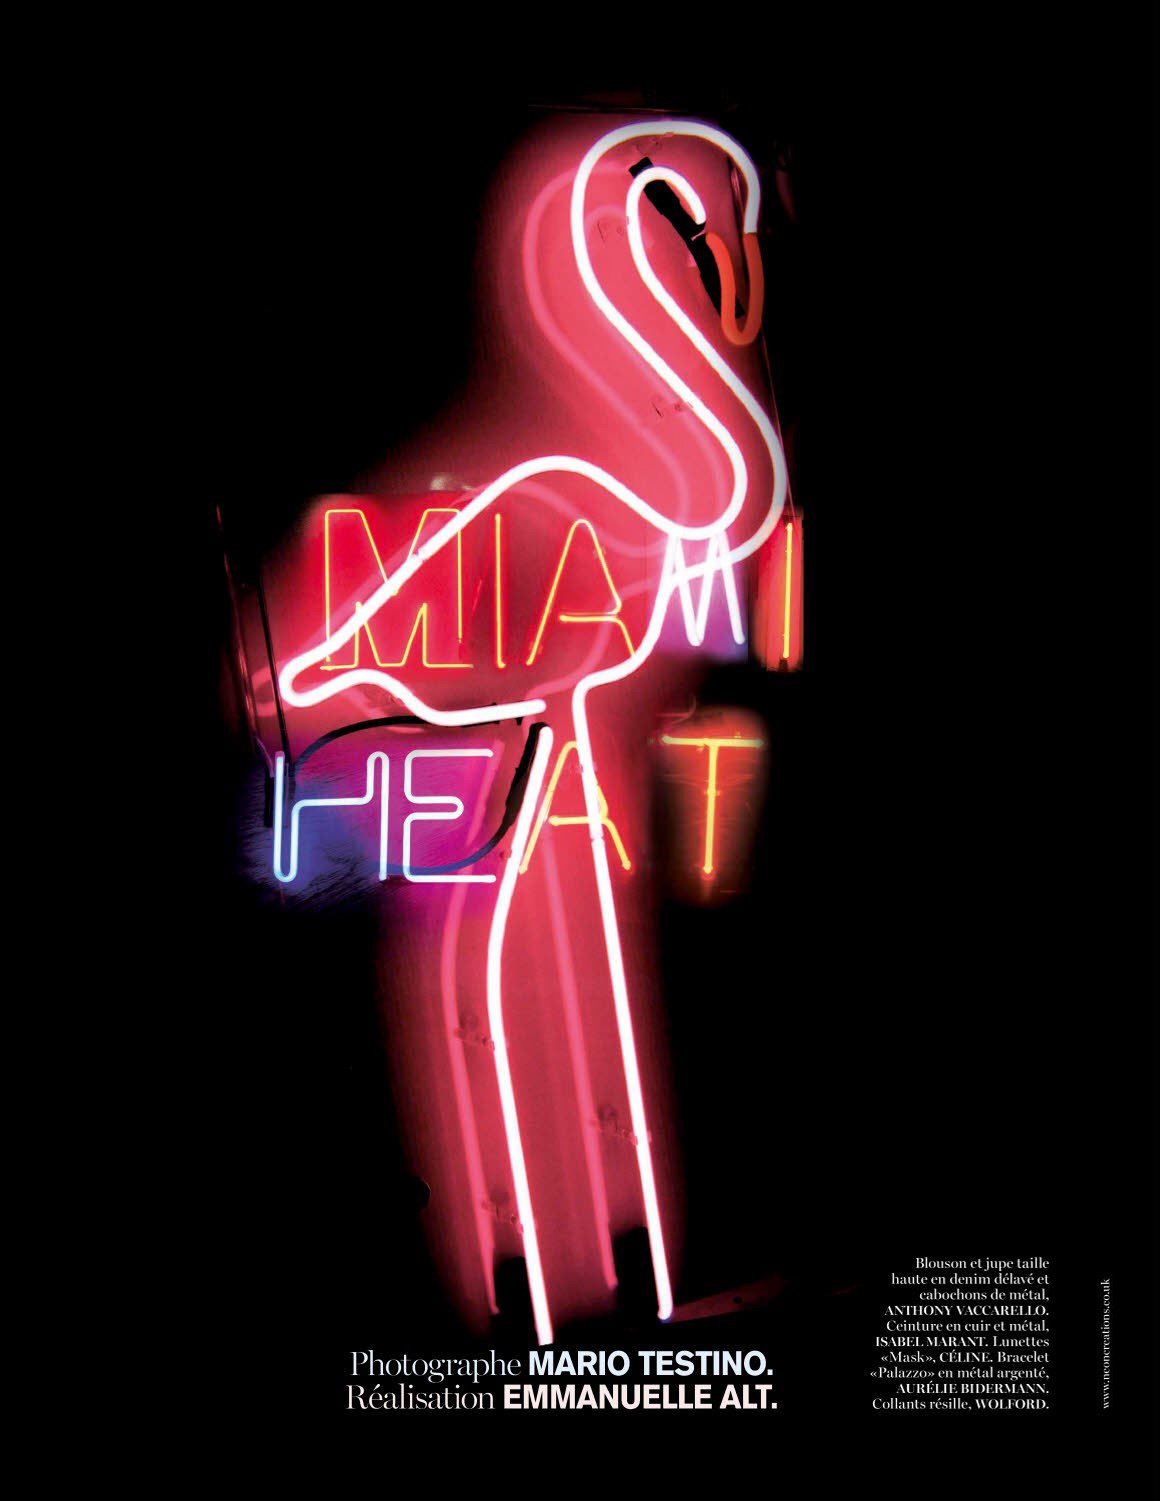 Mario-Testino-Vogue-Paris-April-2014-Miami-Heat-2.jpg